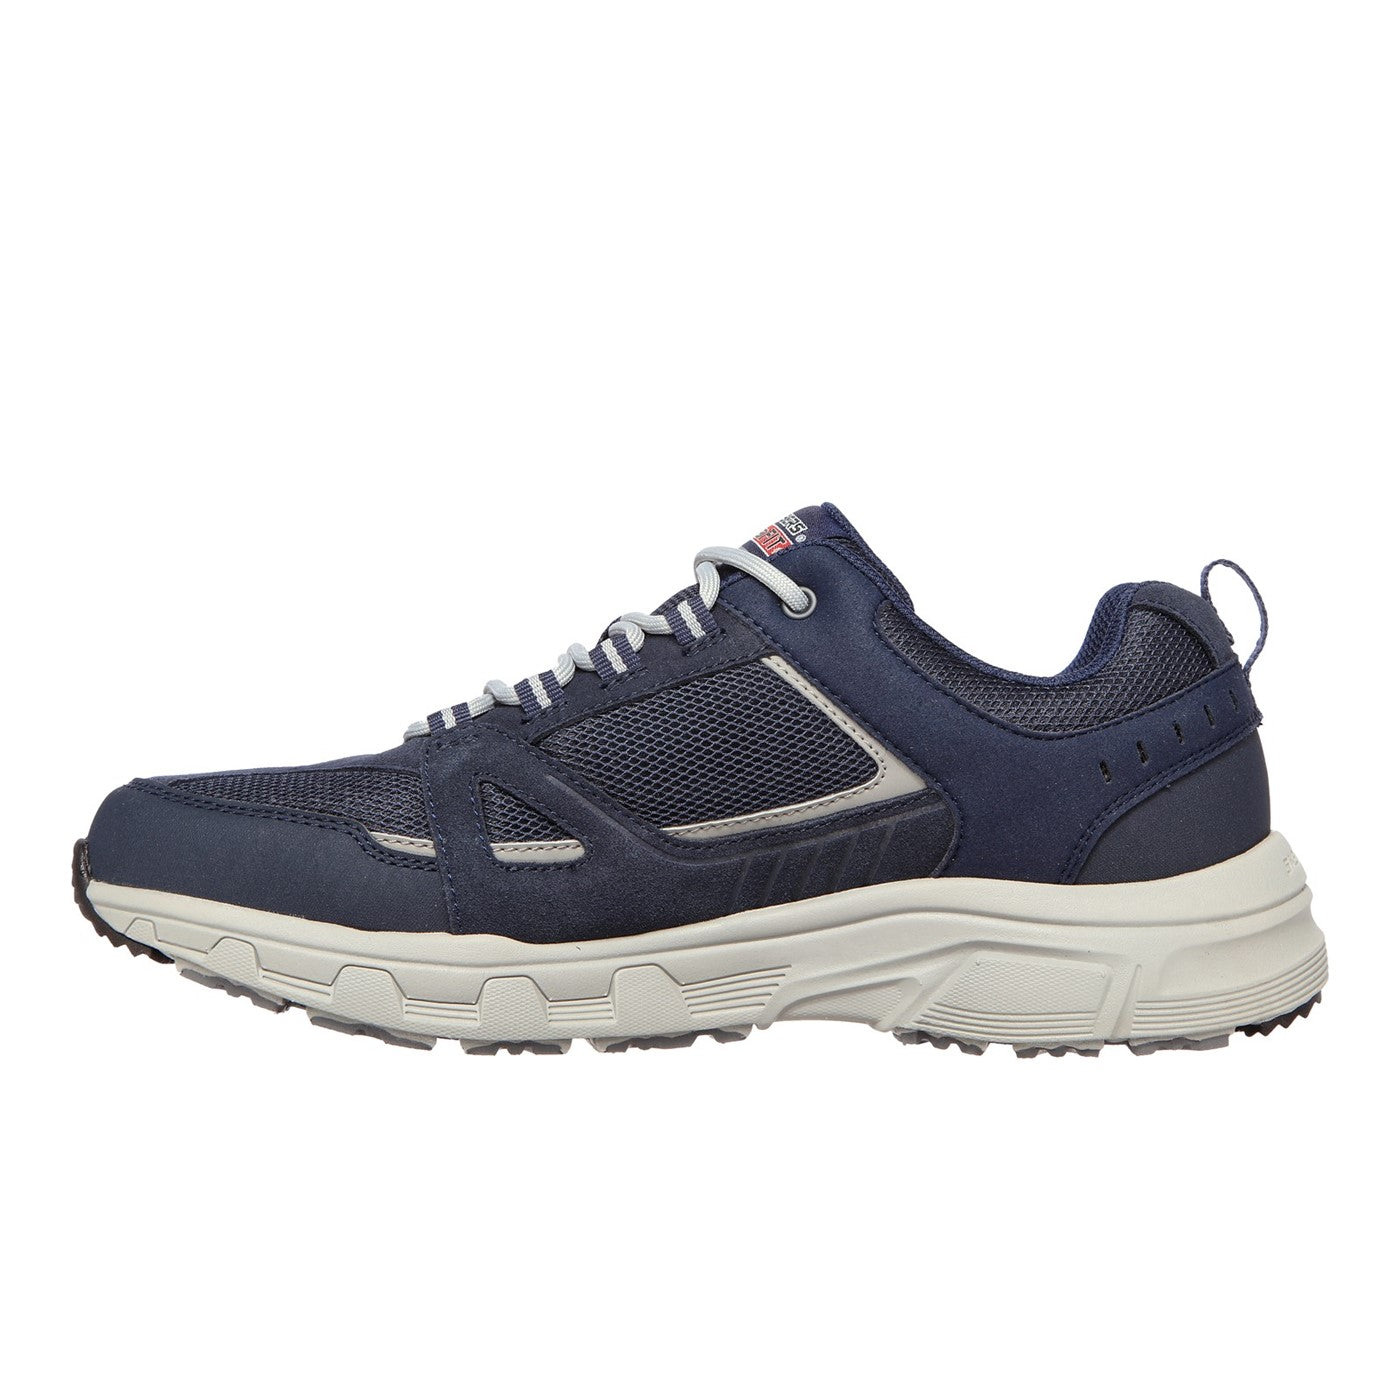 Men's Skechers Oak Canyon Duelist Sports Shoes